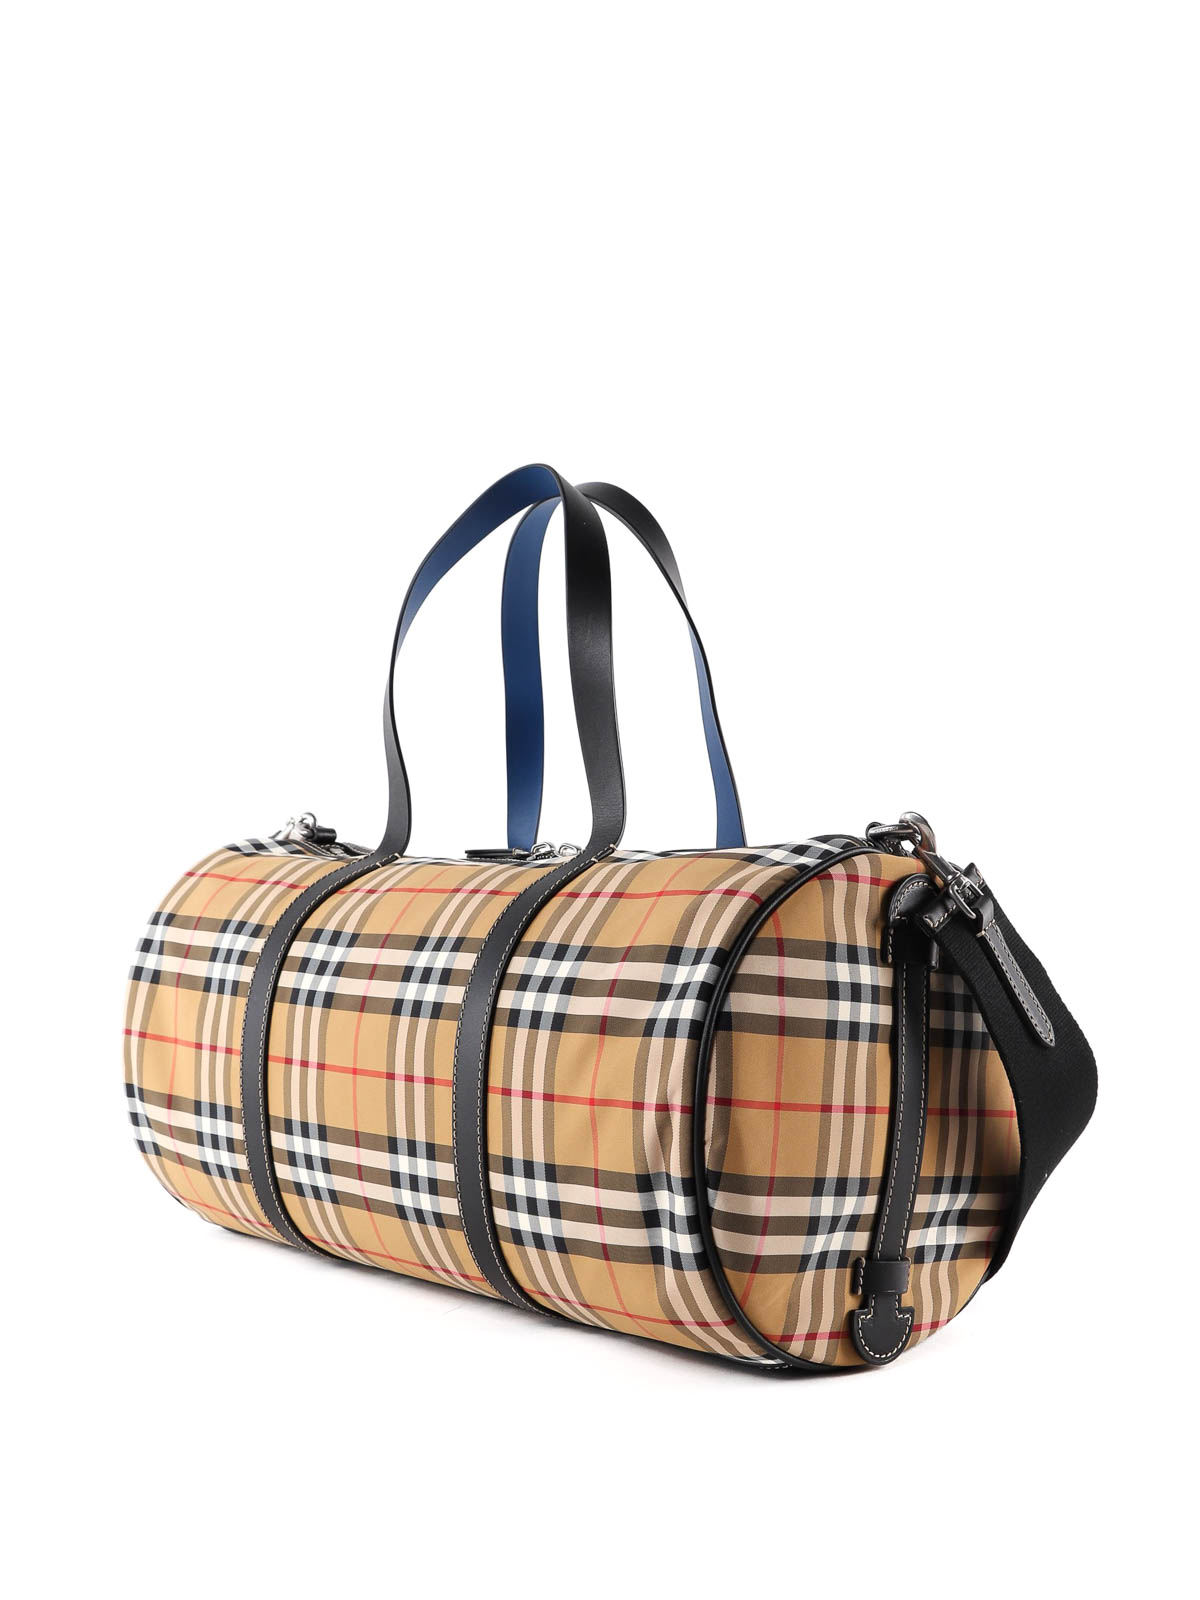 Luggage & Travel bags Burberry - Vintage check nylon duffle bag - 8005522